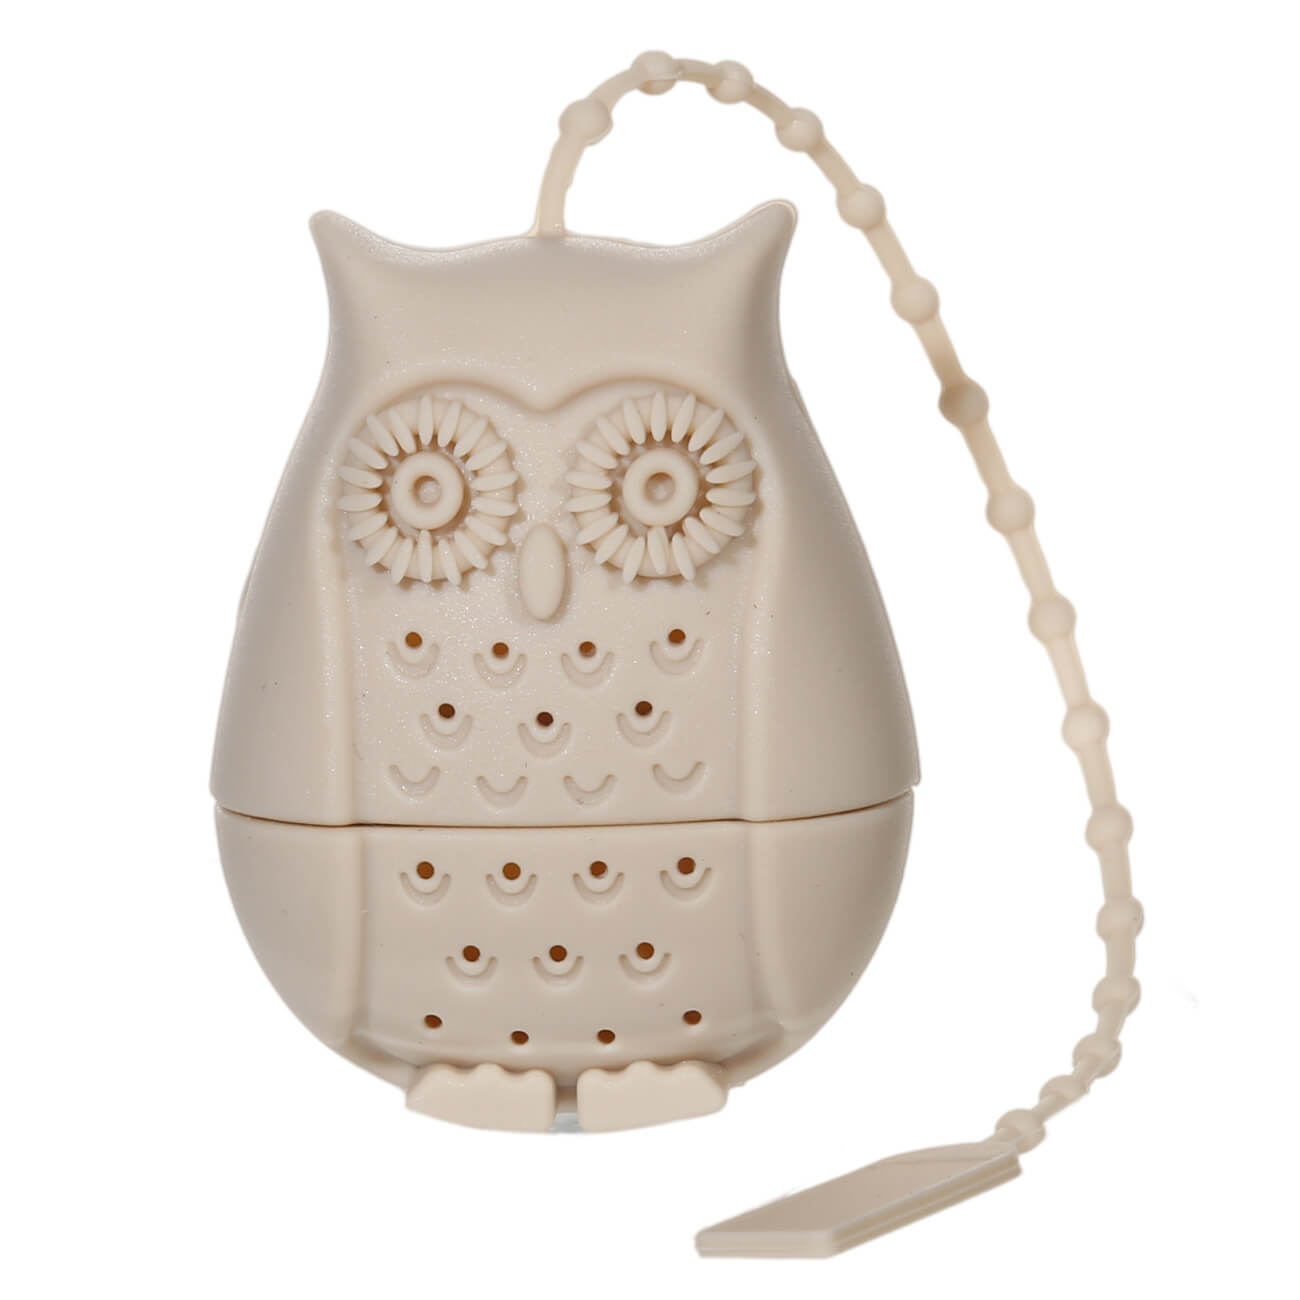 Tea strainer, 19 cm, Silicone, Beige, Owl, Owl изображение № 1